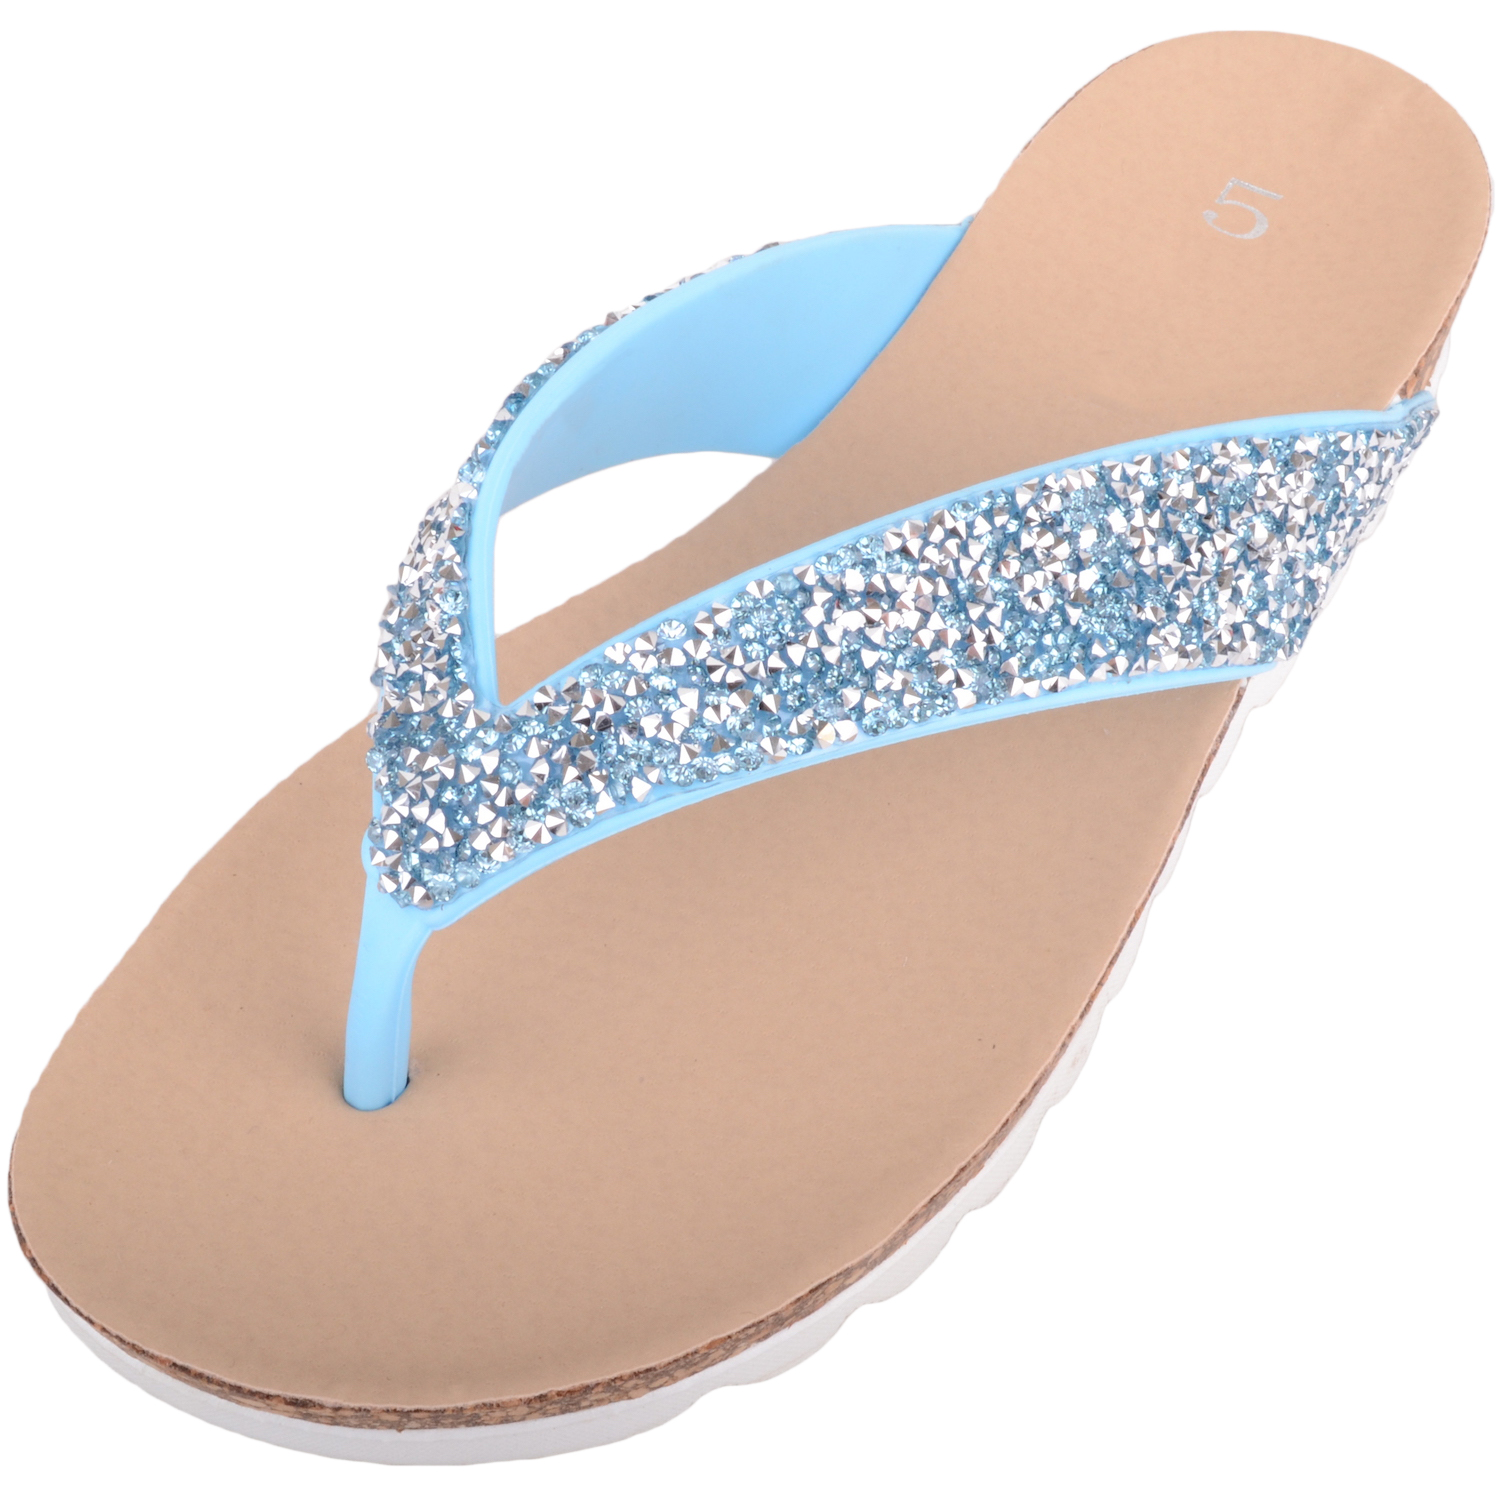 Jewel Encrusted Flip Flops / Sandals 